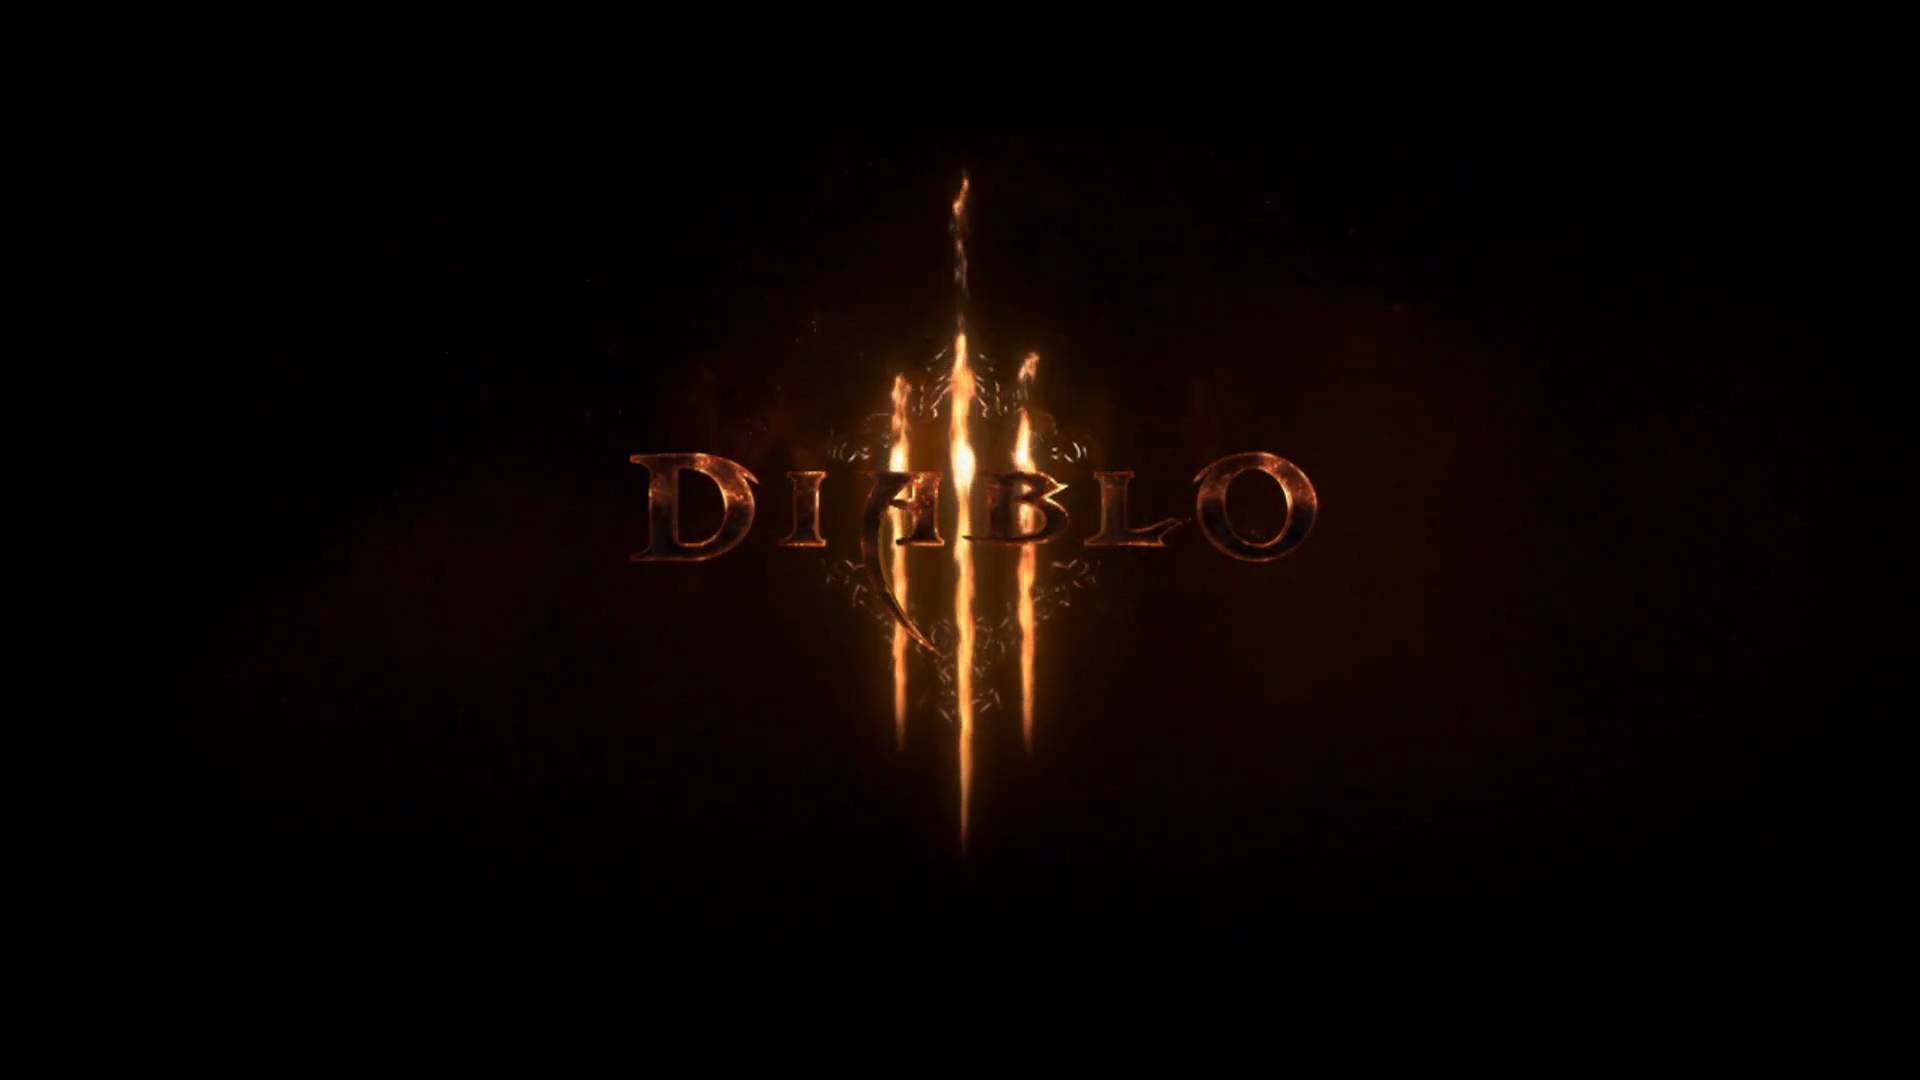 Diablo Logo Animated Wallpaper 1080p